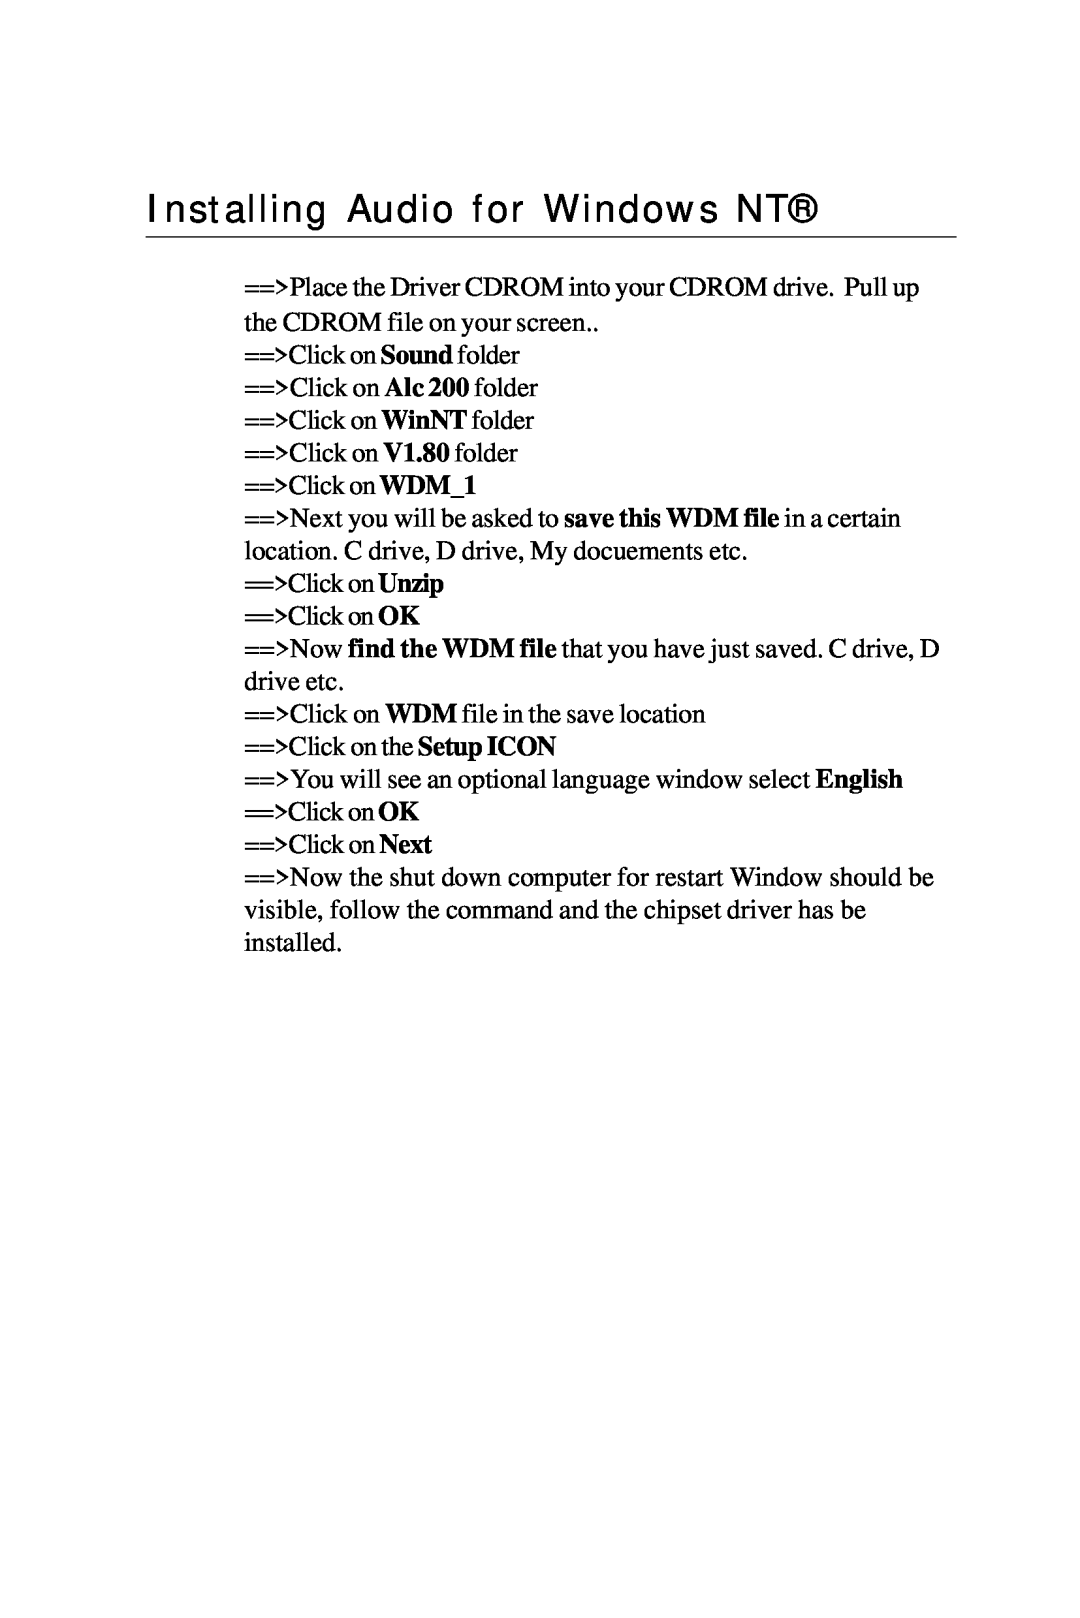 Intel PCM-6896 manual Installing Audio for Windows NT 